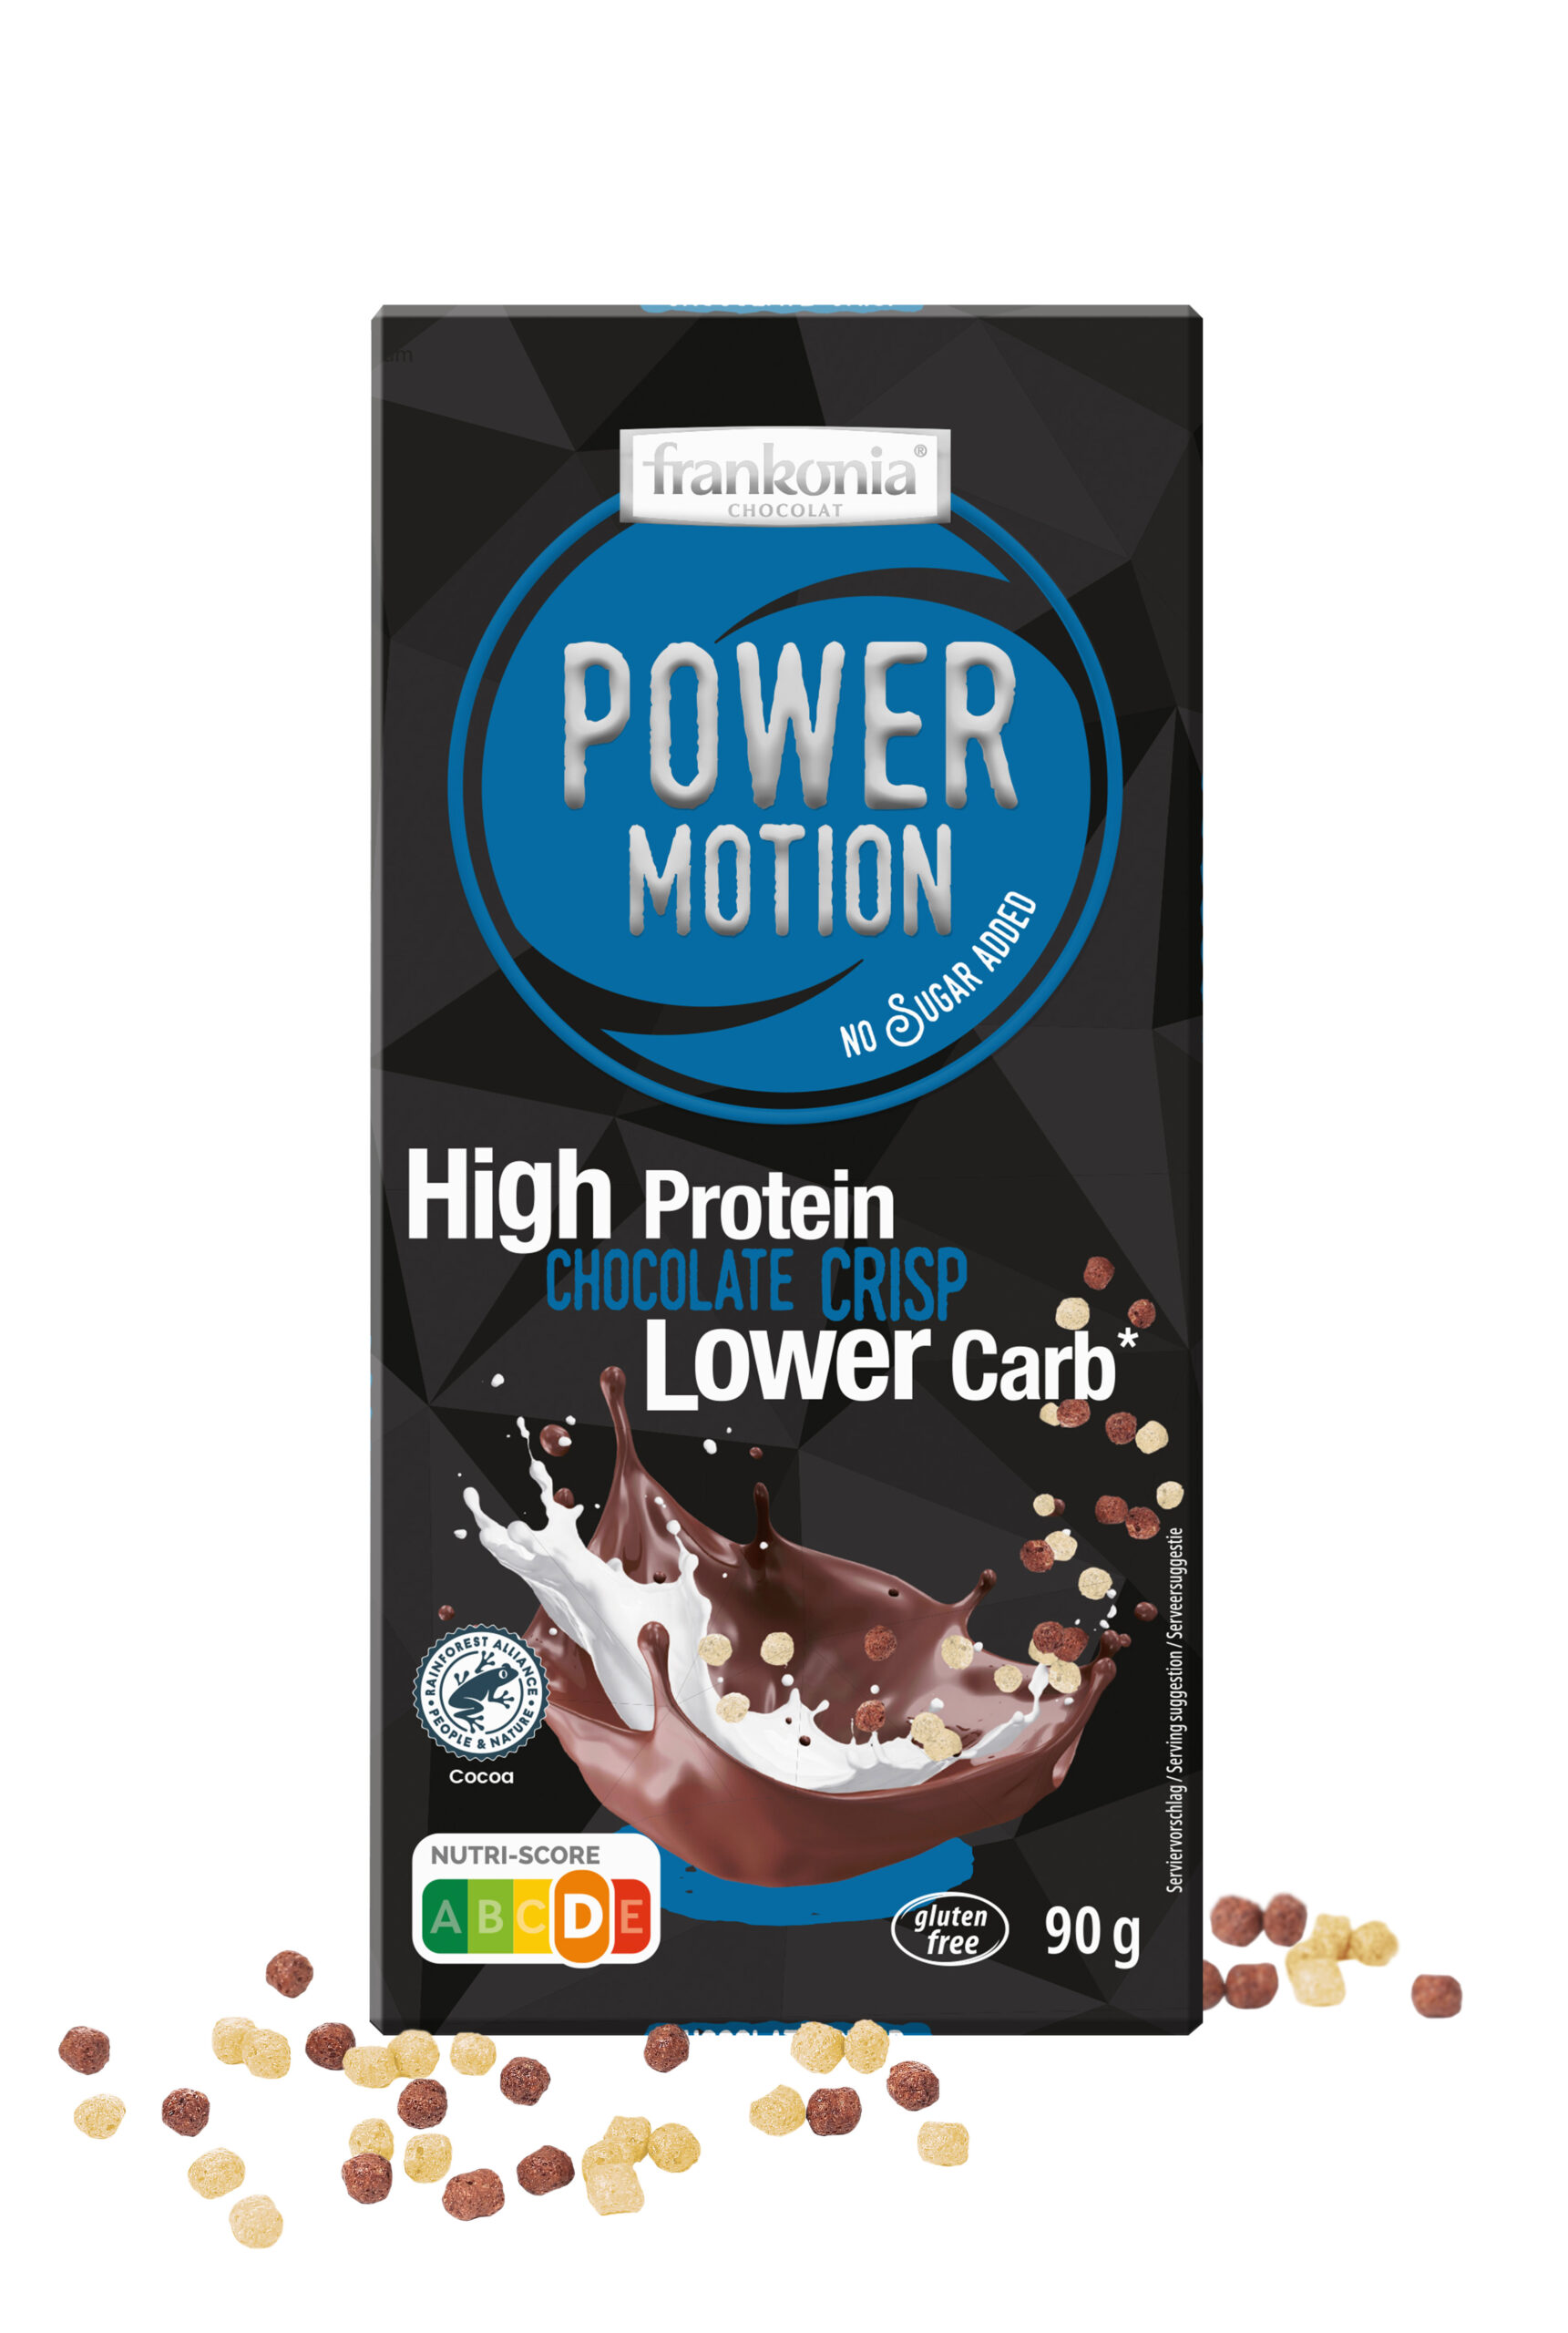 Power Motion High Protein Chocolate Crisp